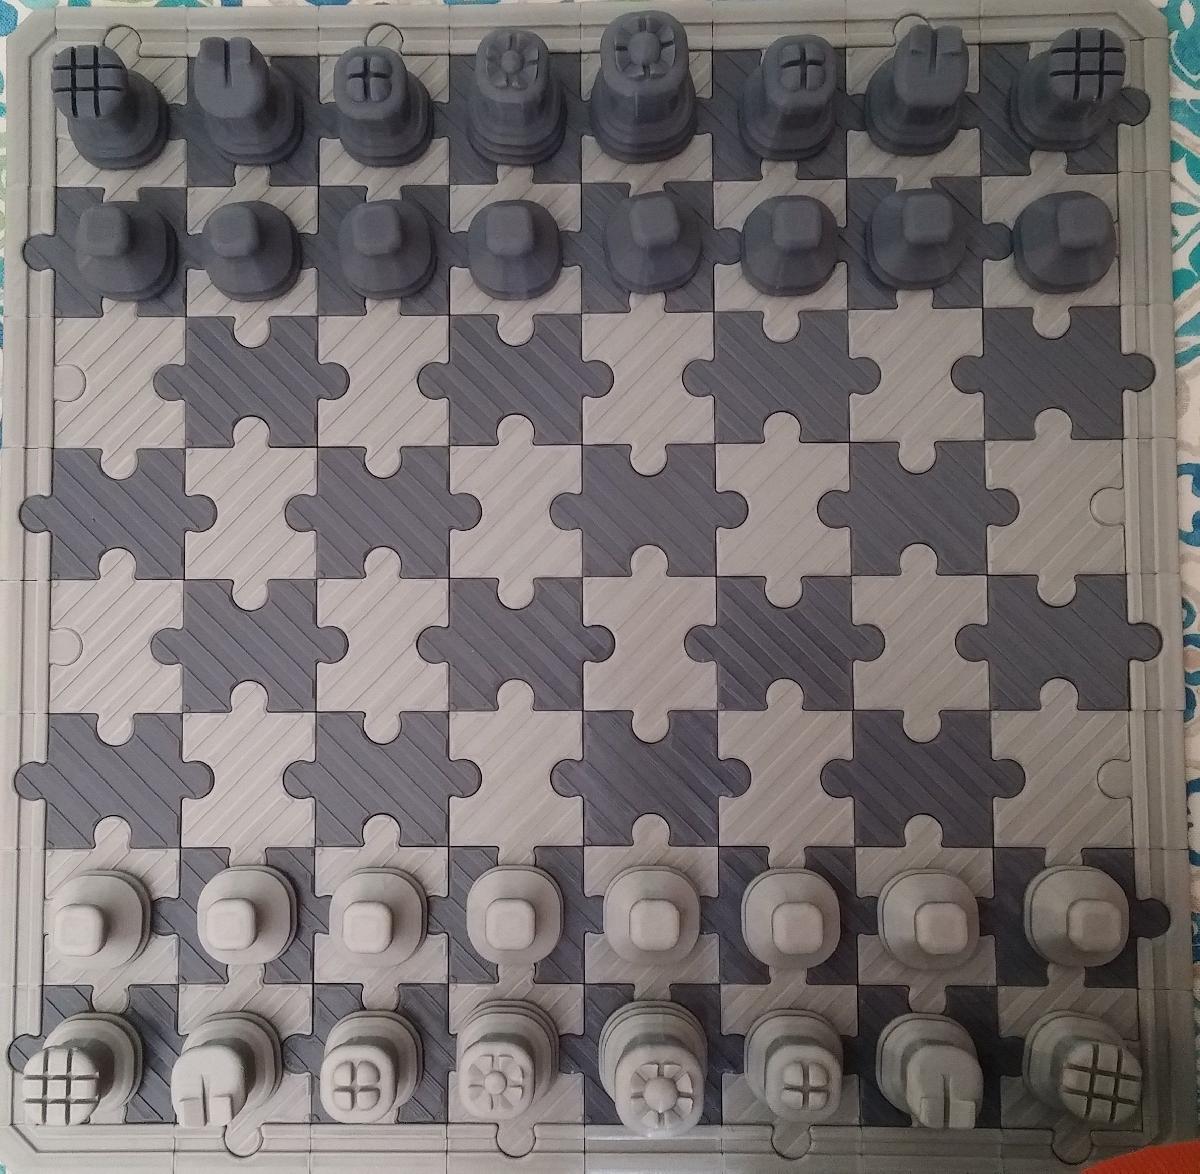 Imprimir STL Rainha da peça de xadrez Modelo 3D - 65365